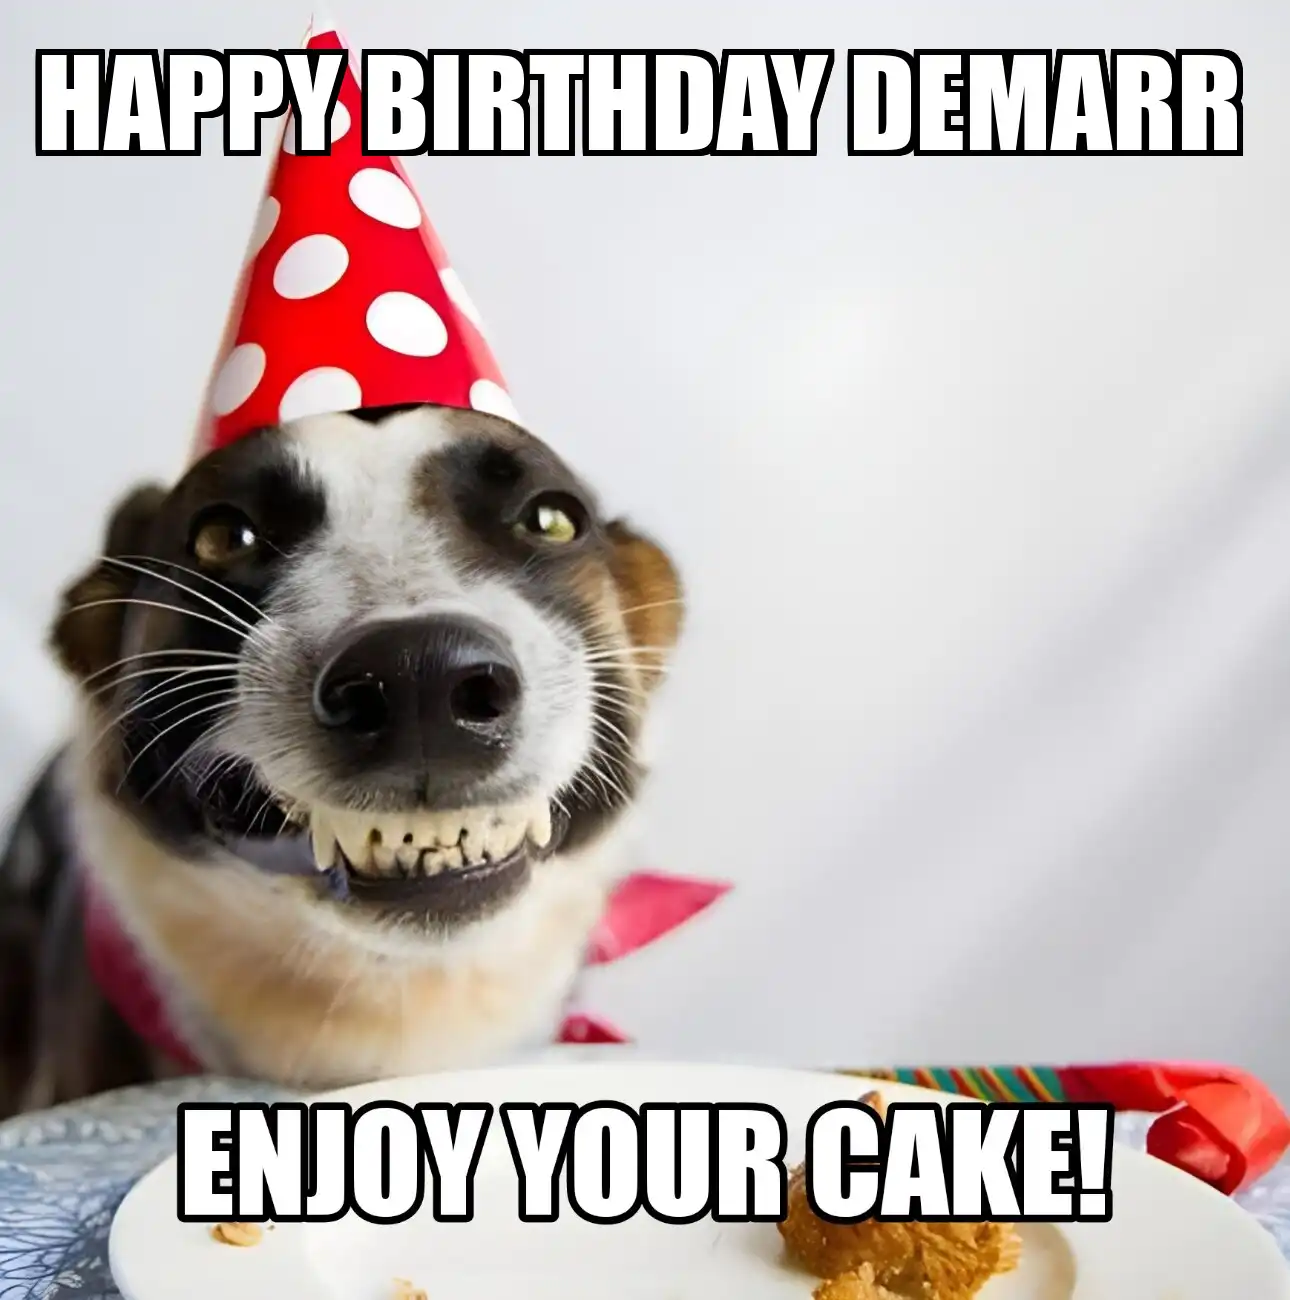 Happy Birthday Demarr Enjoy Your Cake Dog Meme